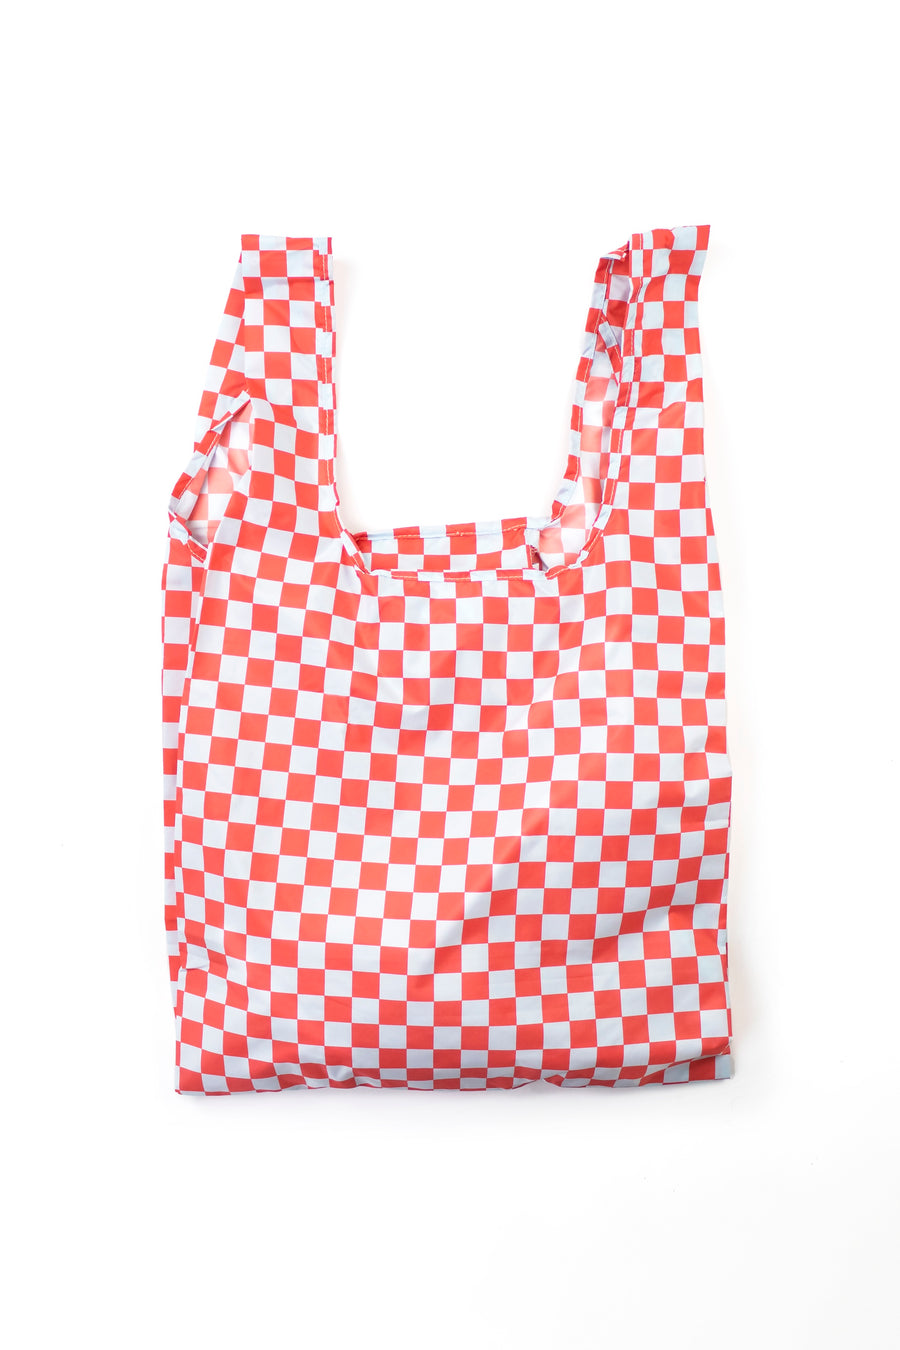 Kind Bag Checkerboard Red Blue Medium Reusable Bag Flatlay